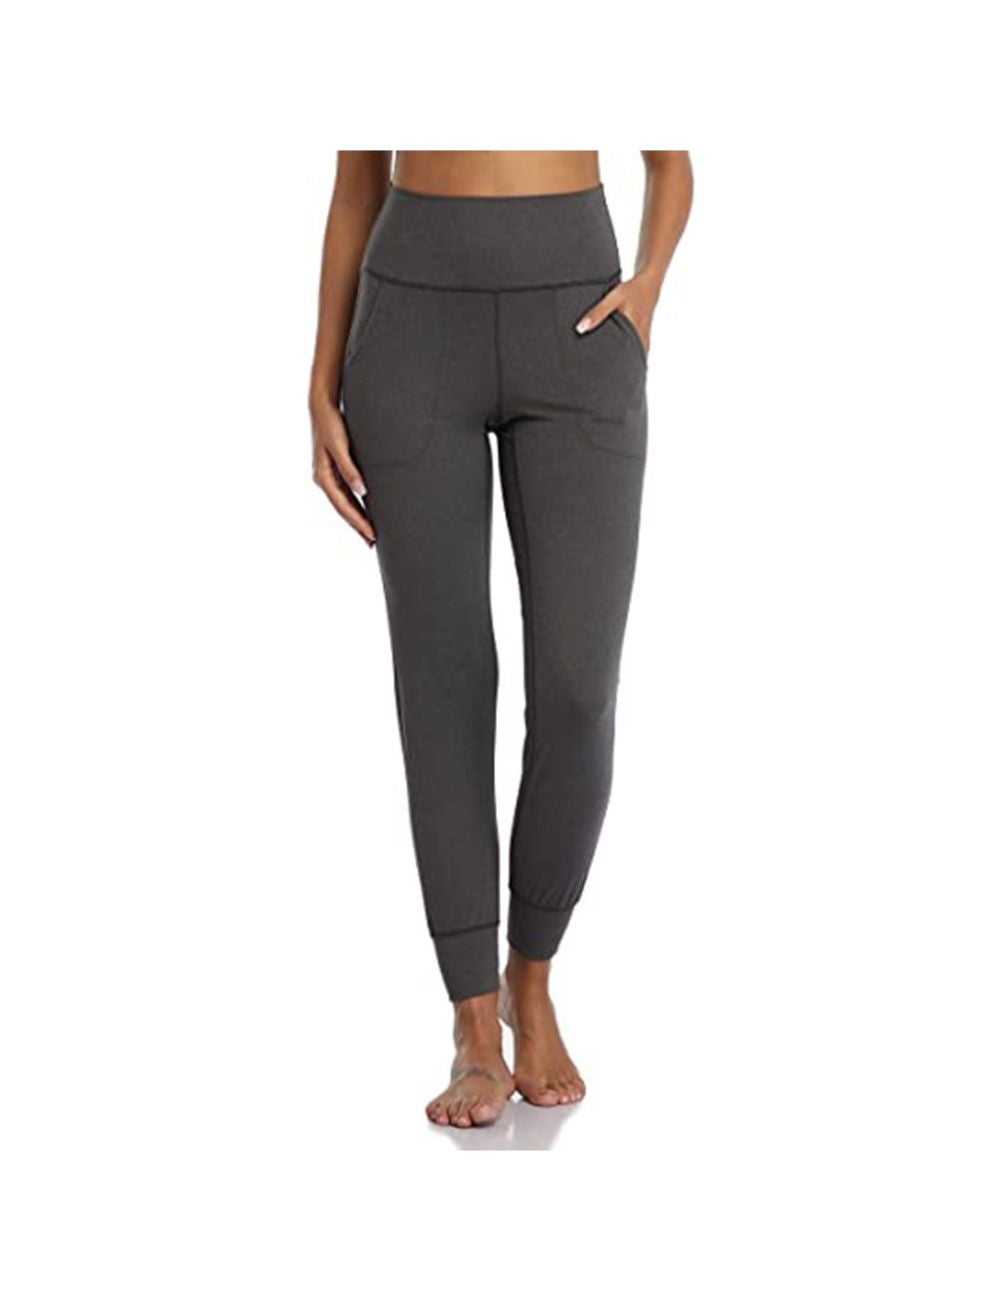 Women's Bottom Sweatpants Joggers Pants Workout High Waisted Yoga Lounge  Pants With Pockets Short Damaged Pants for Women Grey XXL